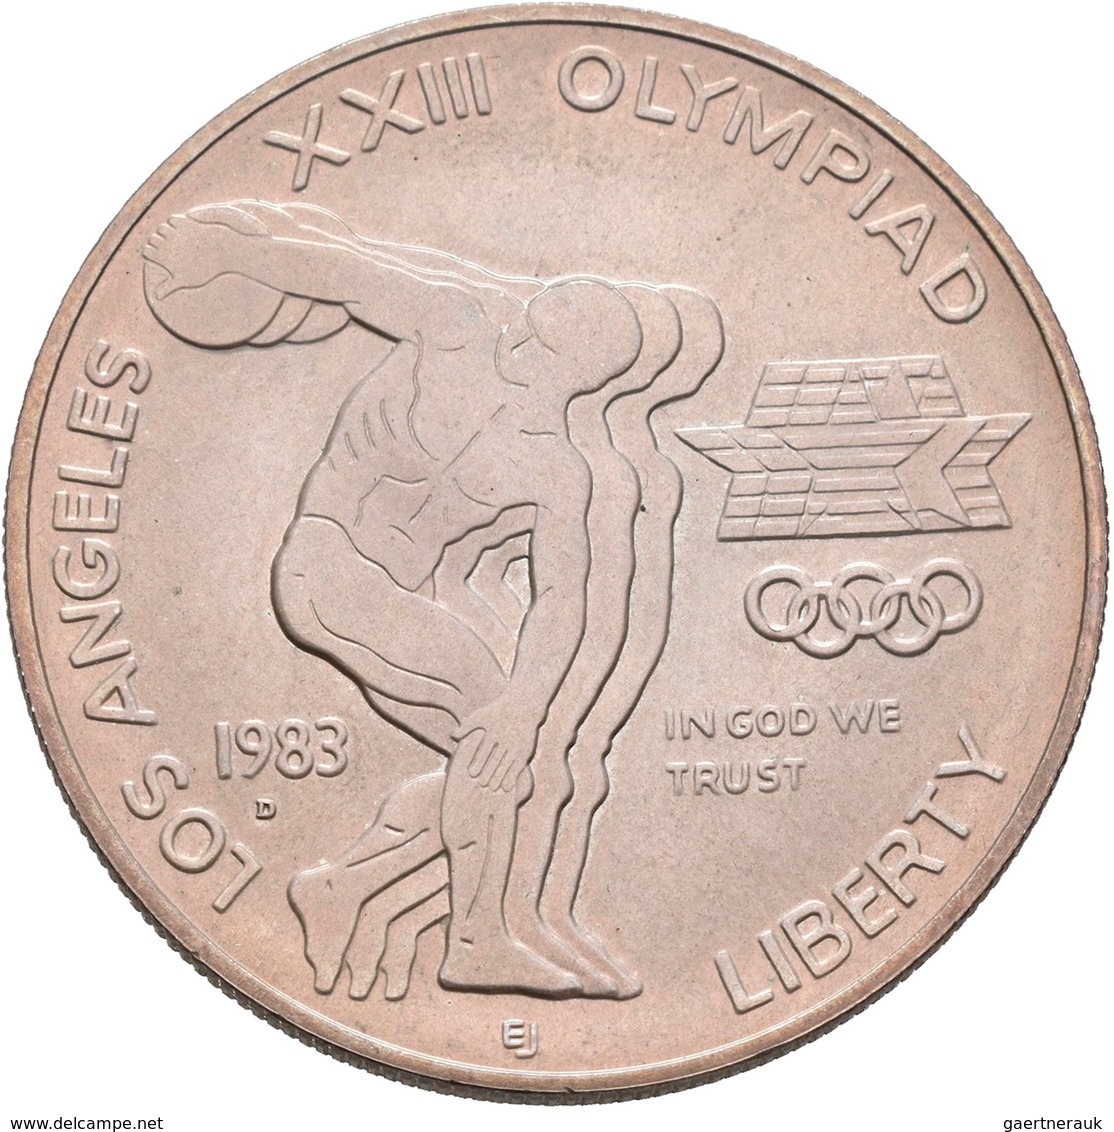 Vereinigte Staaten von Amerika: Lot 5 Stück; Morgan Dollar 1897 S, Peace Dollar 1922, Dollar 1983 Lo